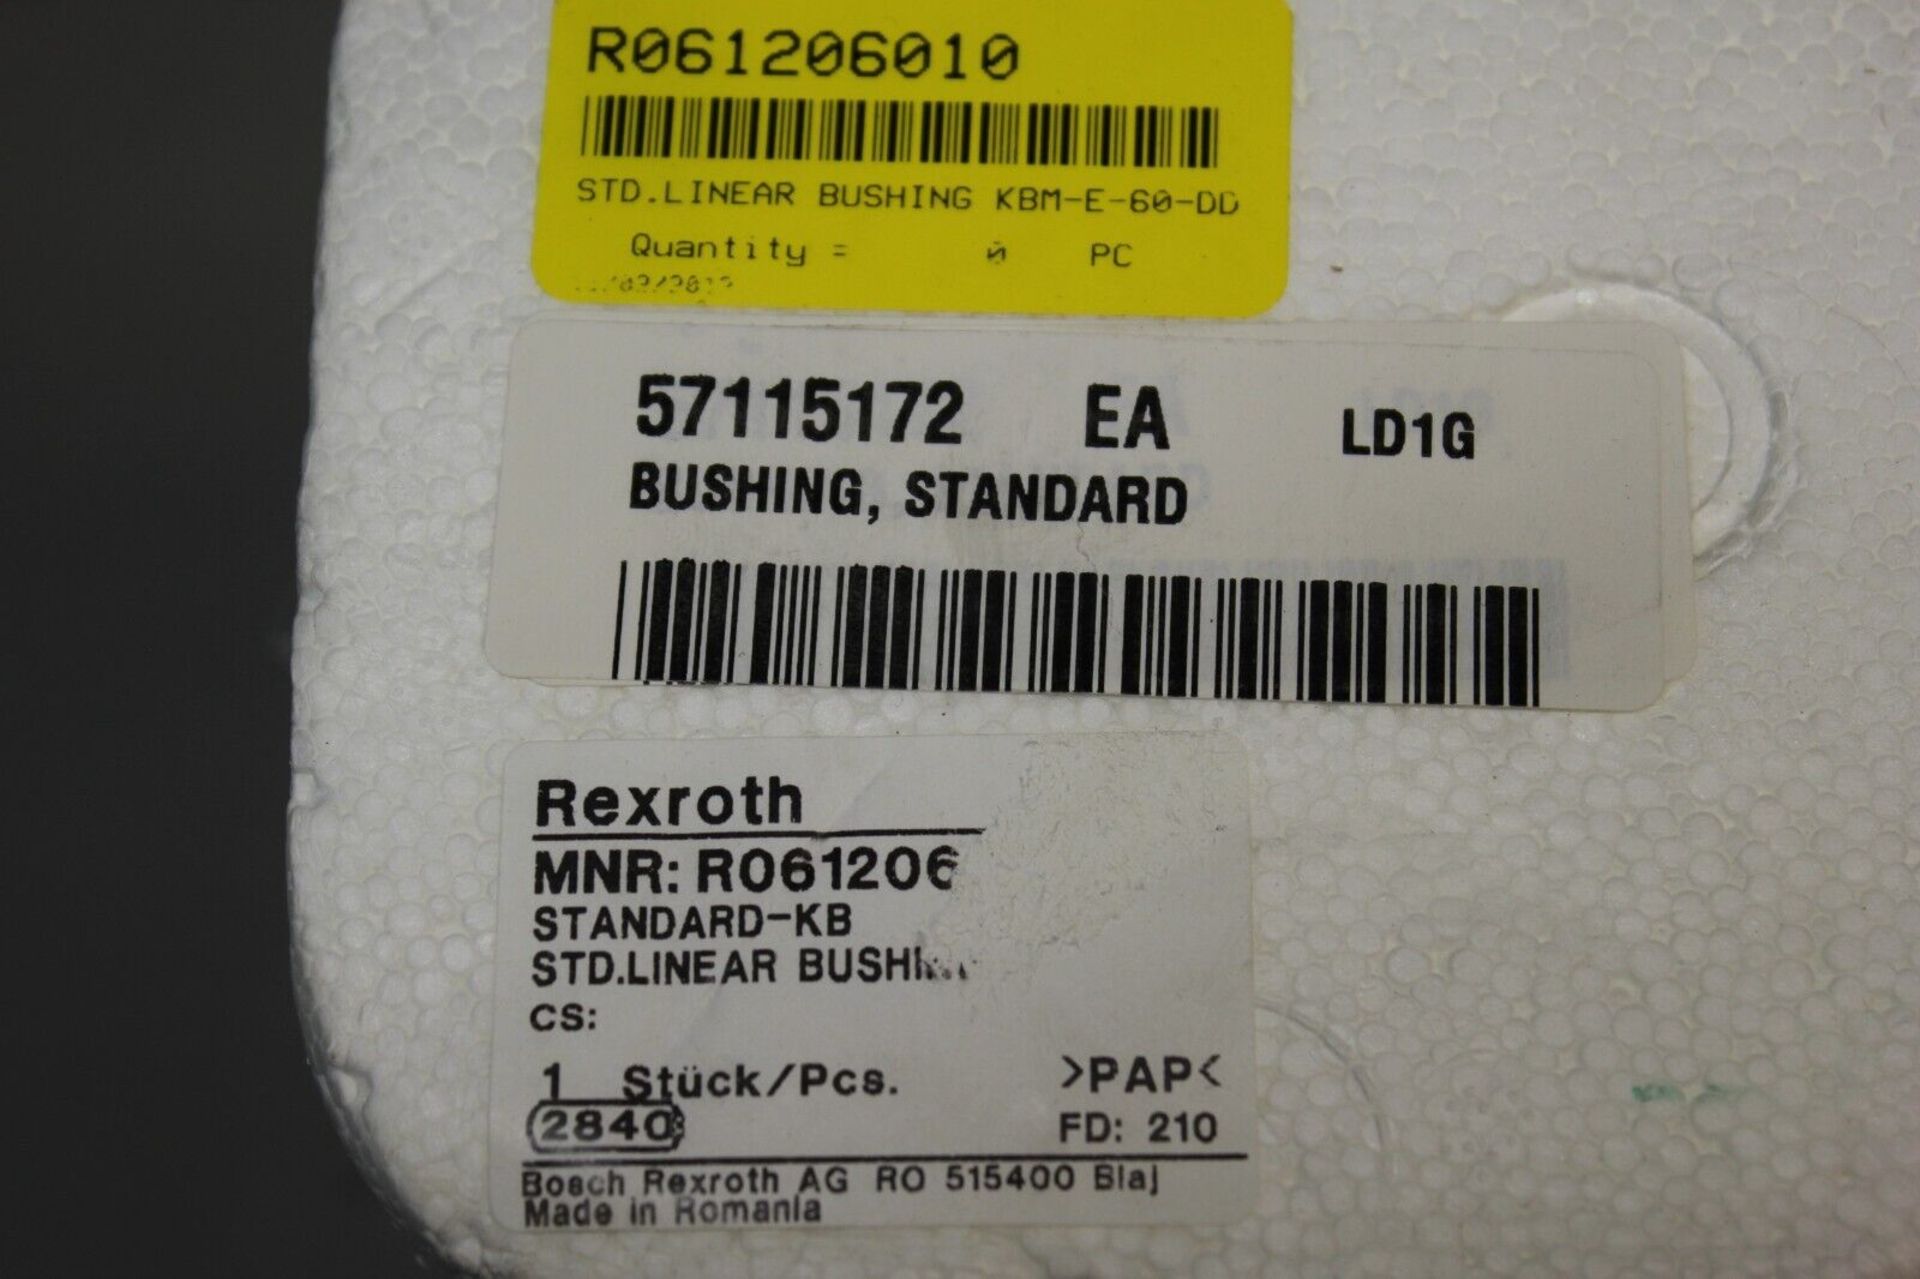 NEW REXROTH LINEAR BUSHING R061206010 KBM-E-60-DD - Image 3 of 4